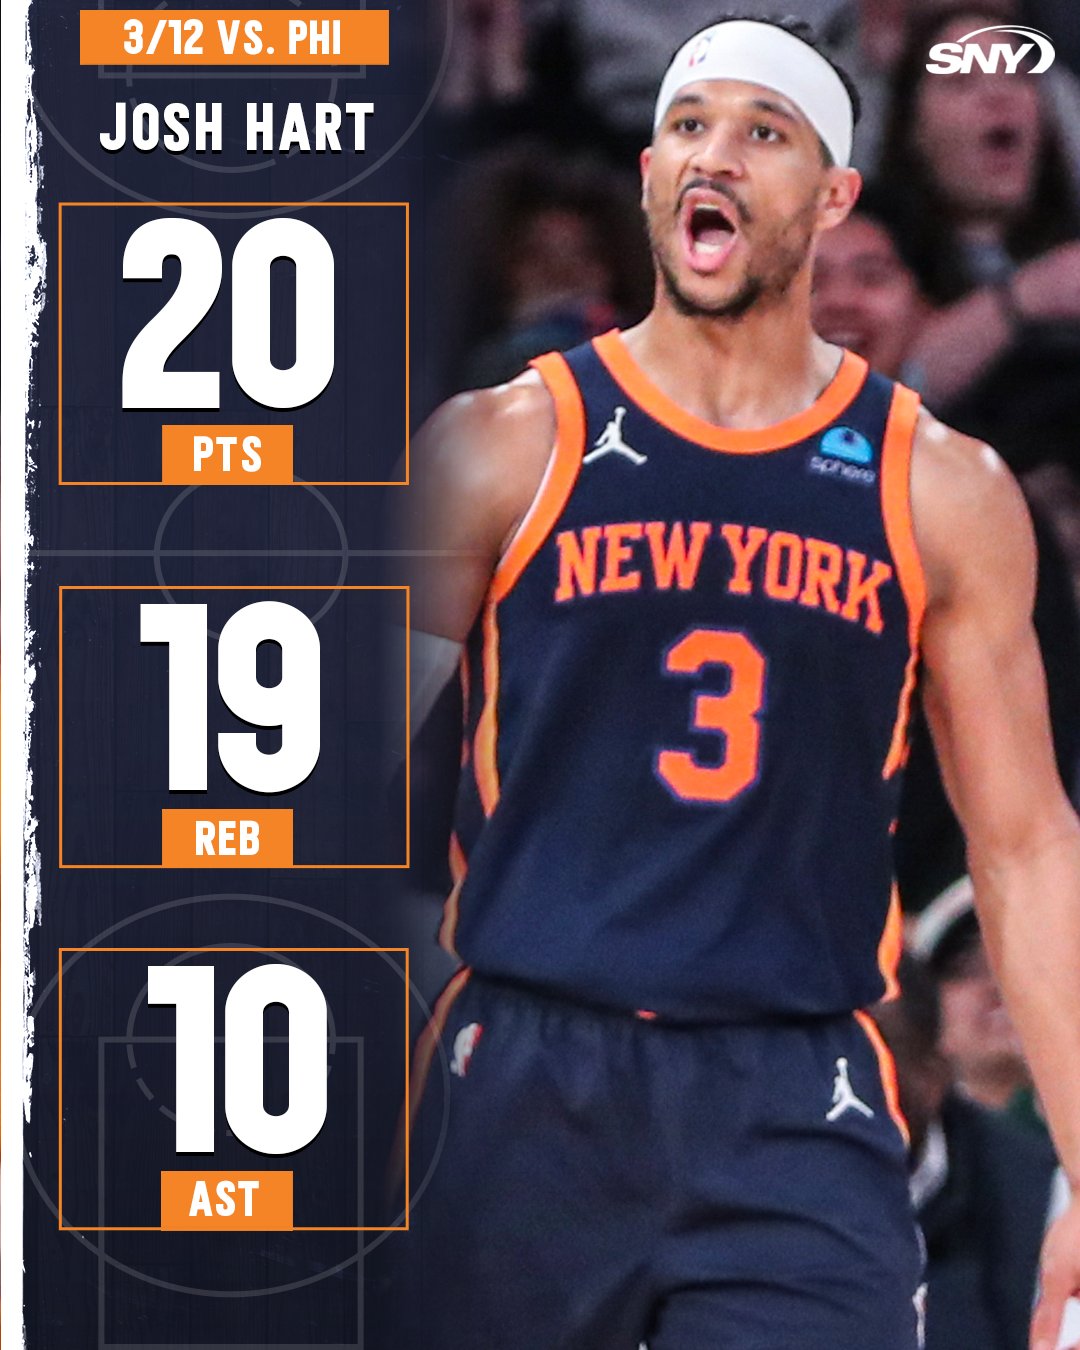 Knicks Brasil (36-26) (@NYKnicksBR) / X